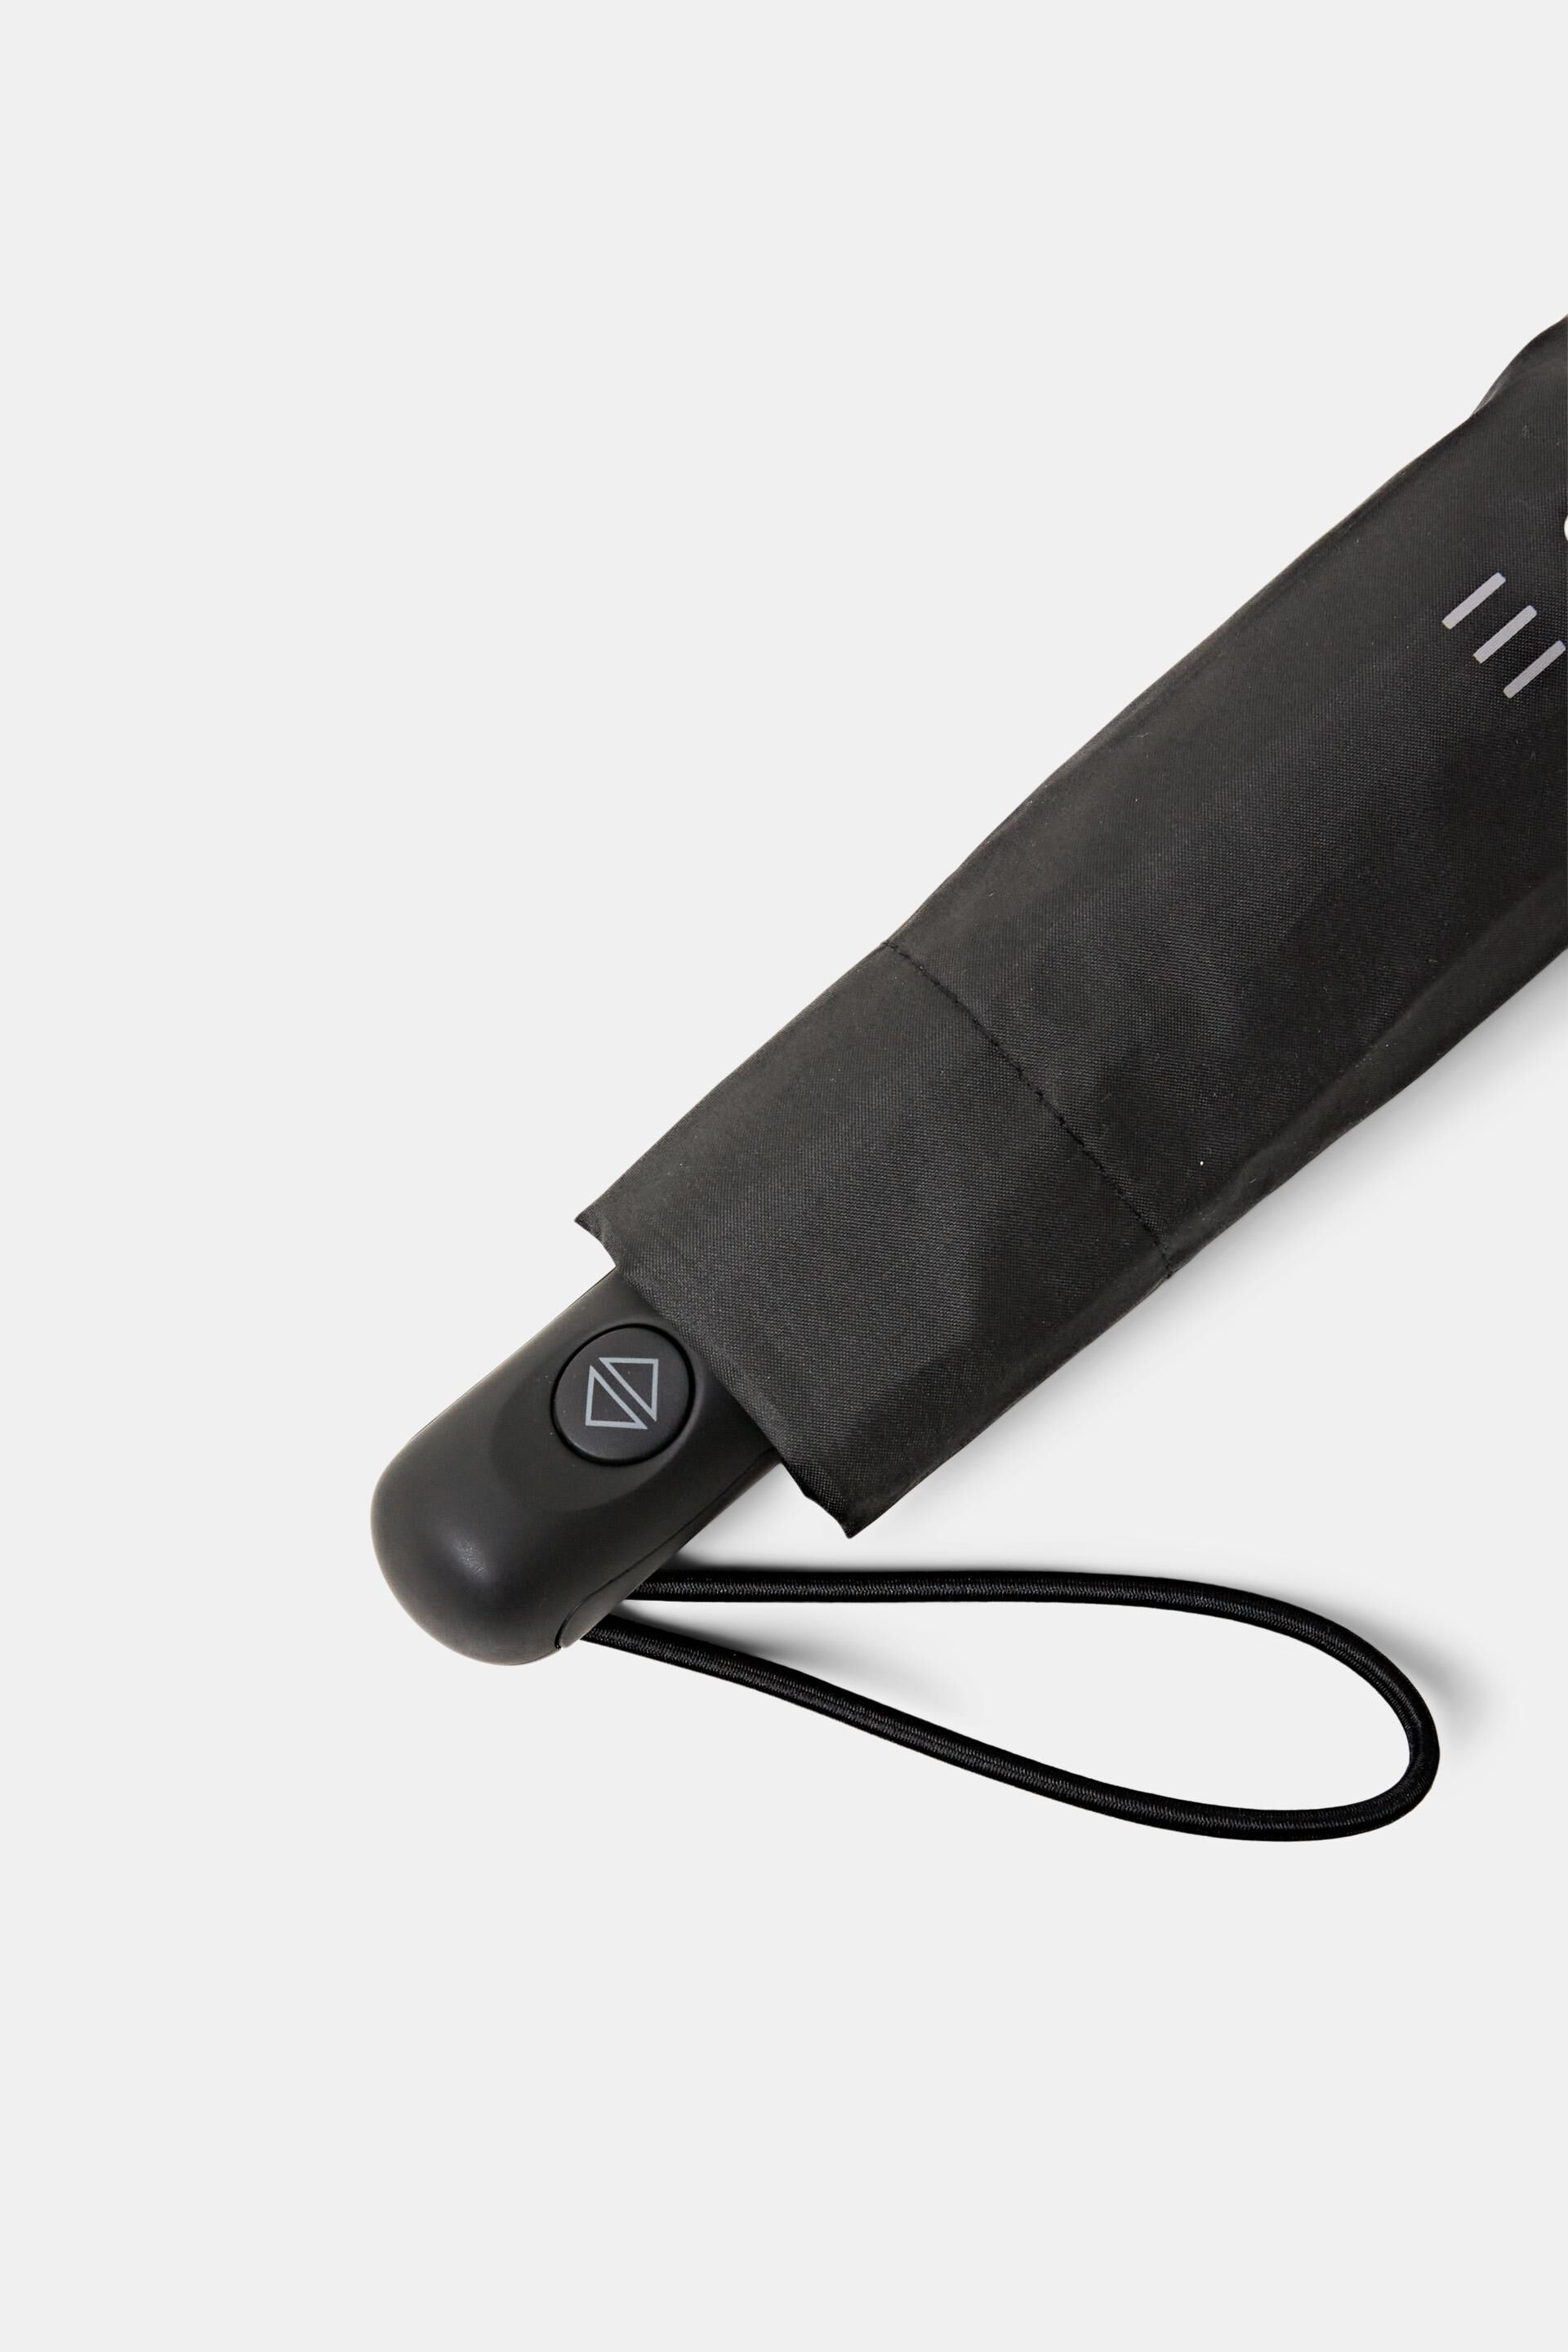 Esprit pocket in slimline Easymatic umbrella black